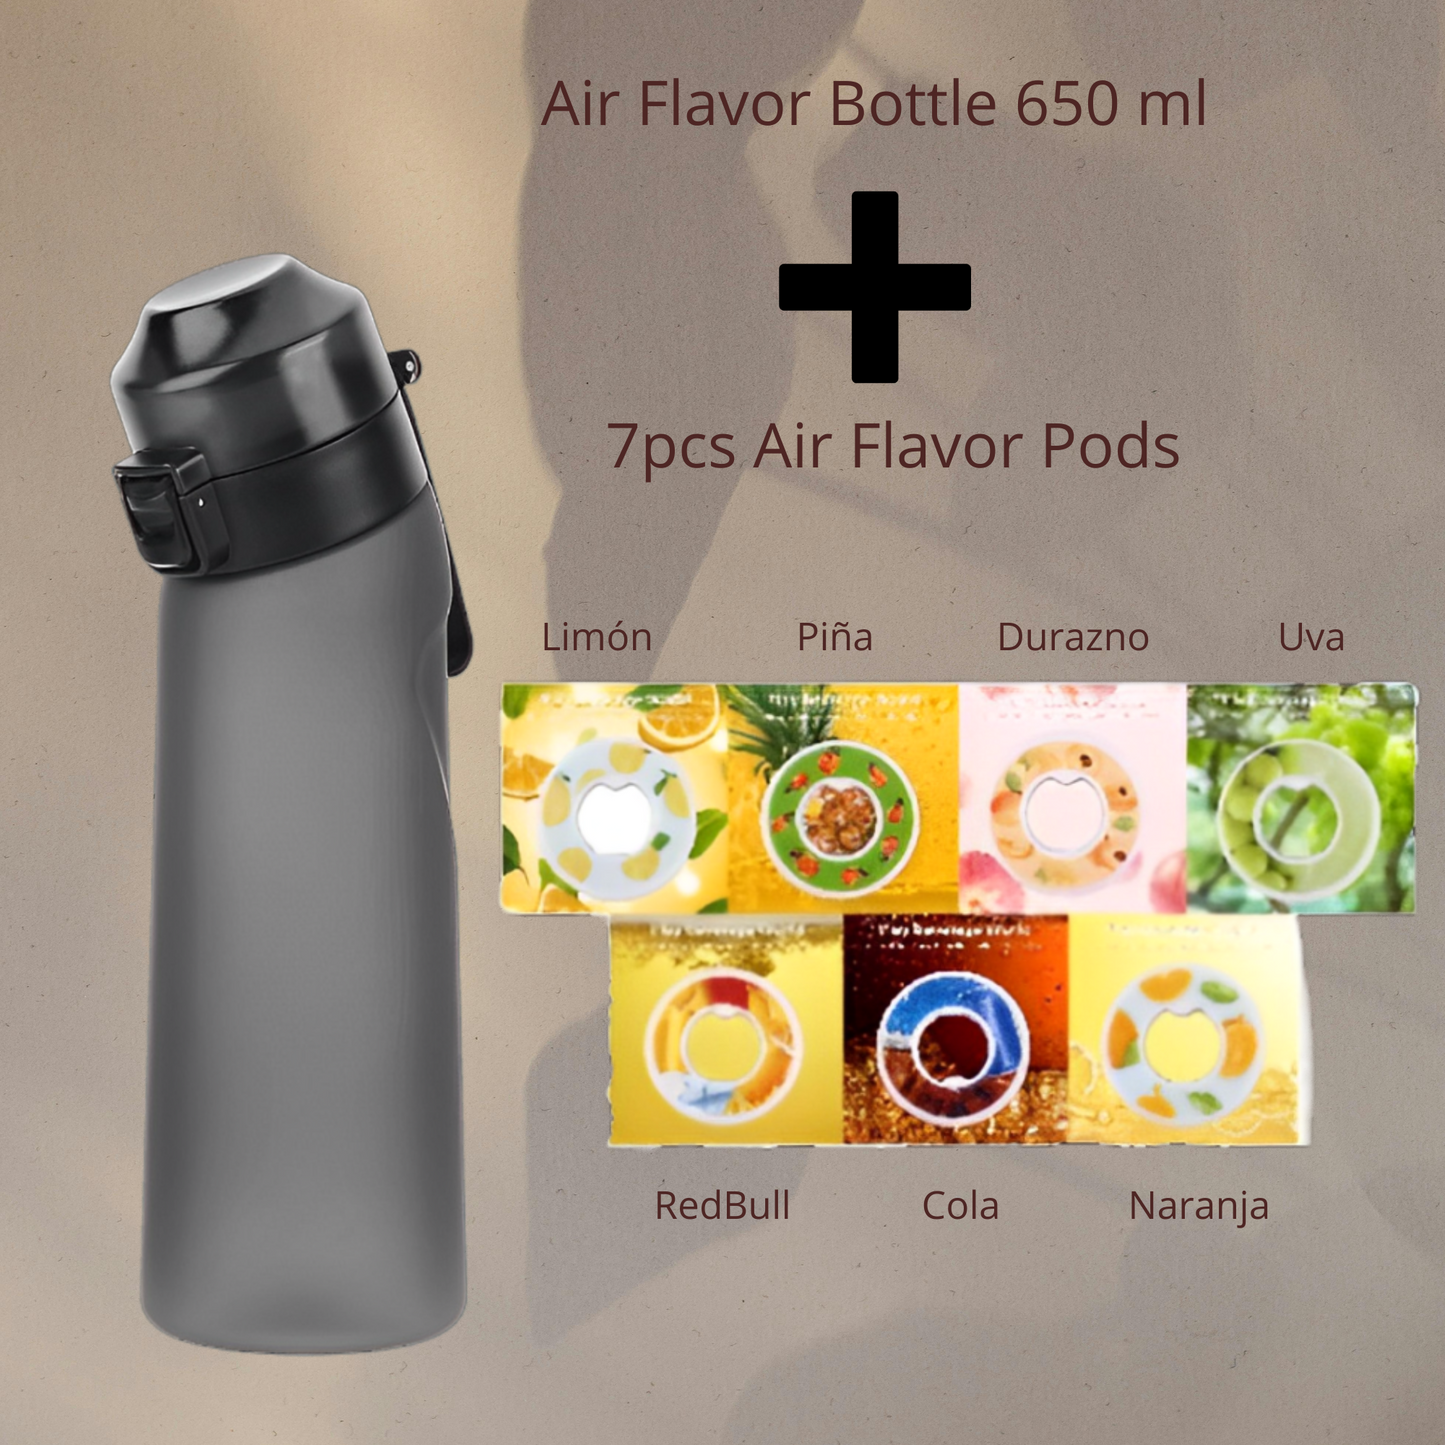 AirFlavor Bottle